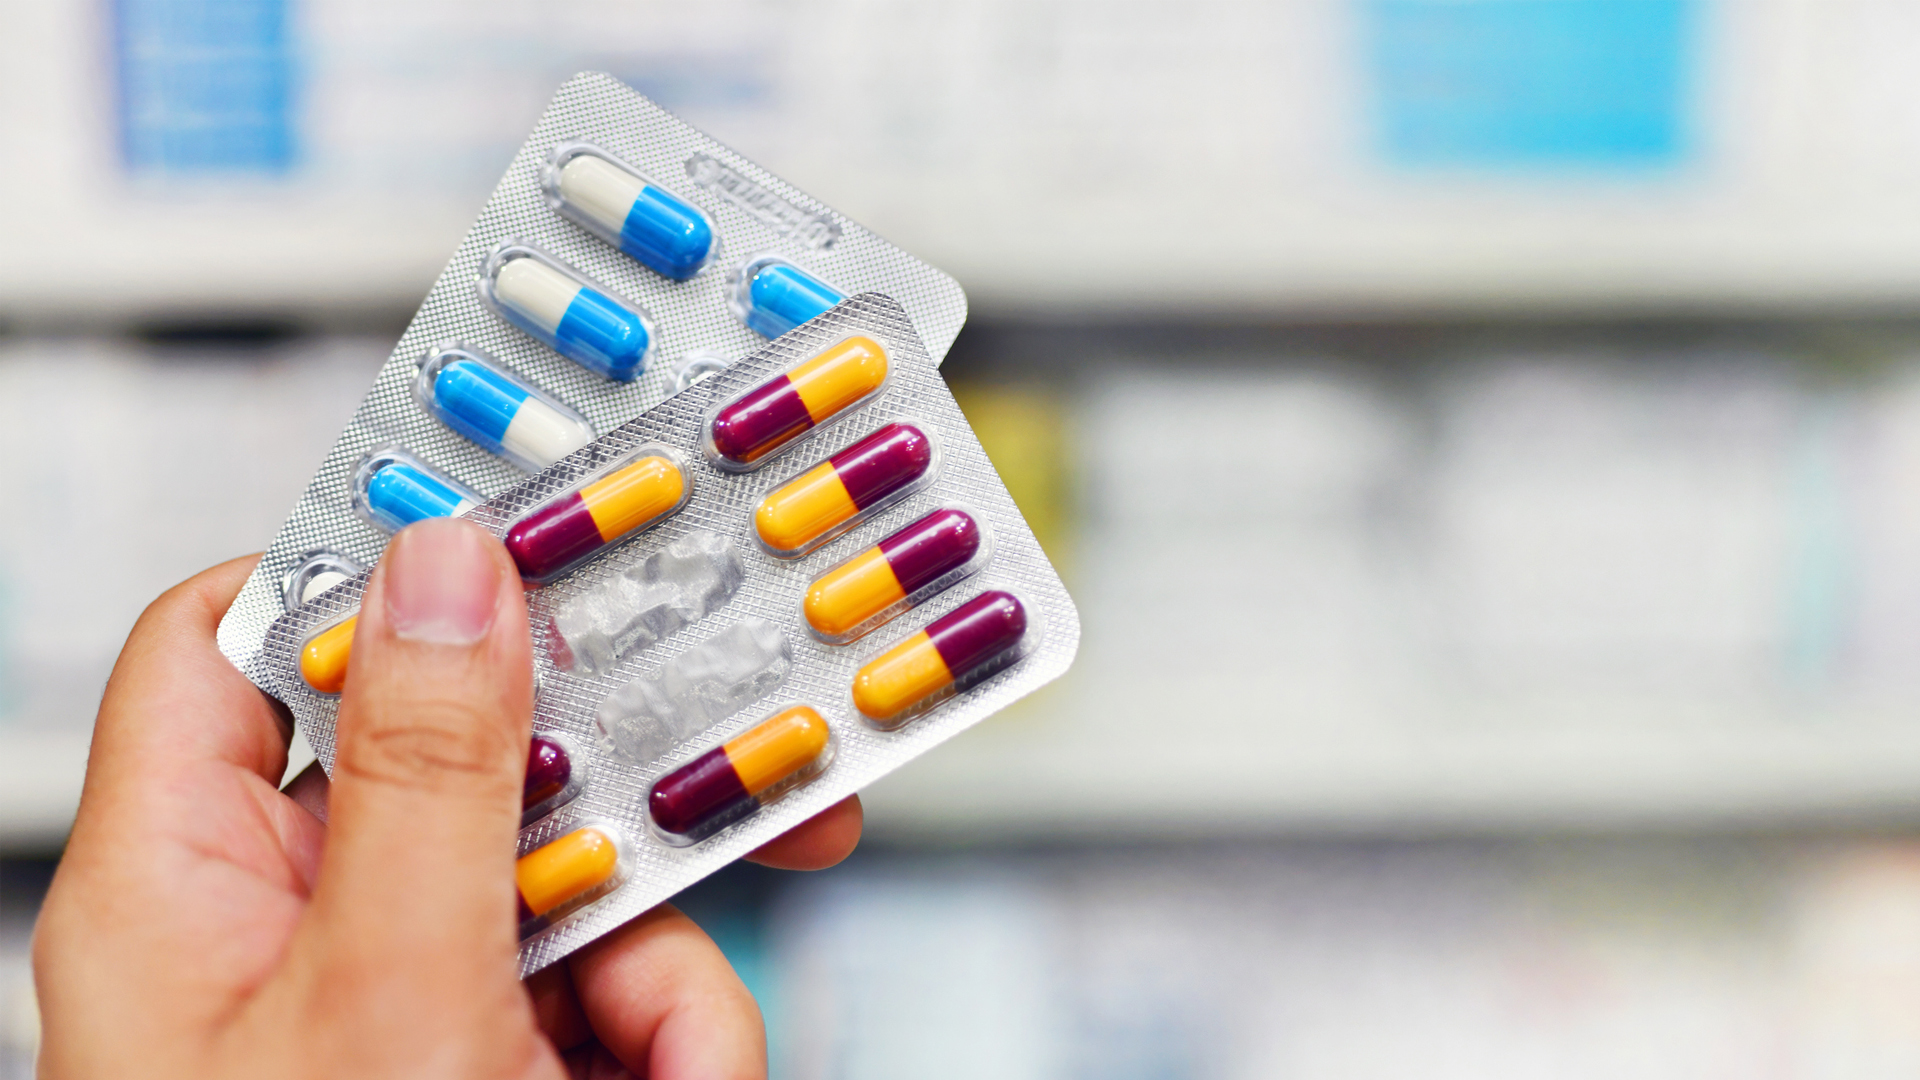 Reducing antibiotic prescribing with rapid POC respiratory infection test